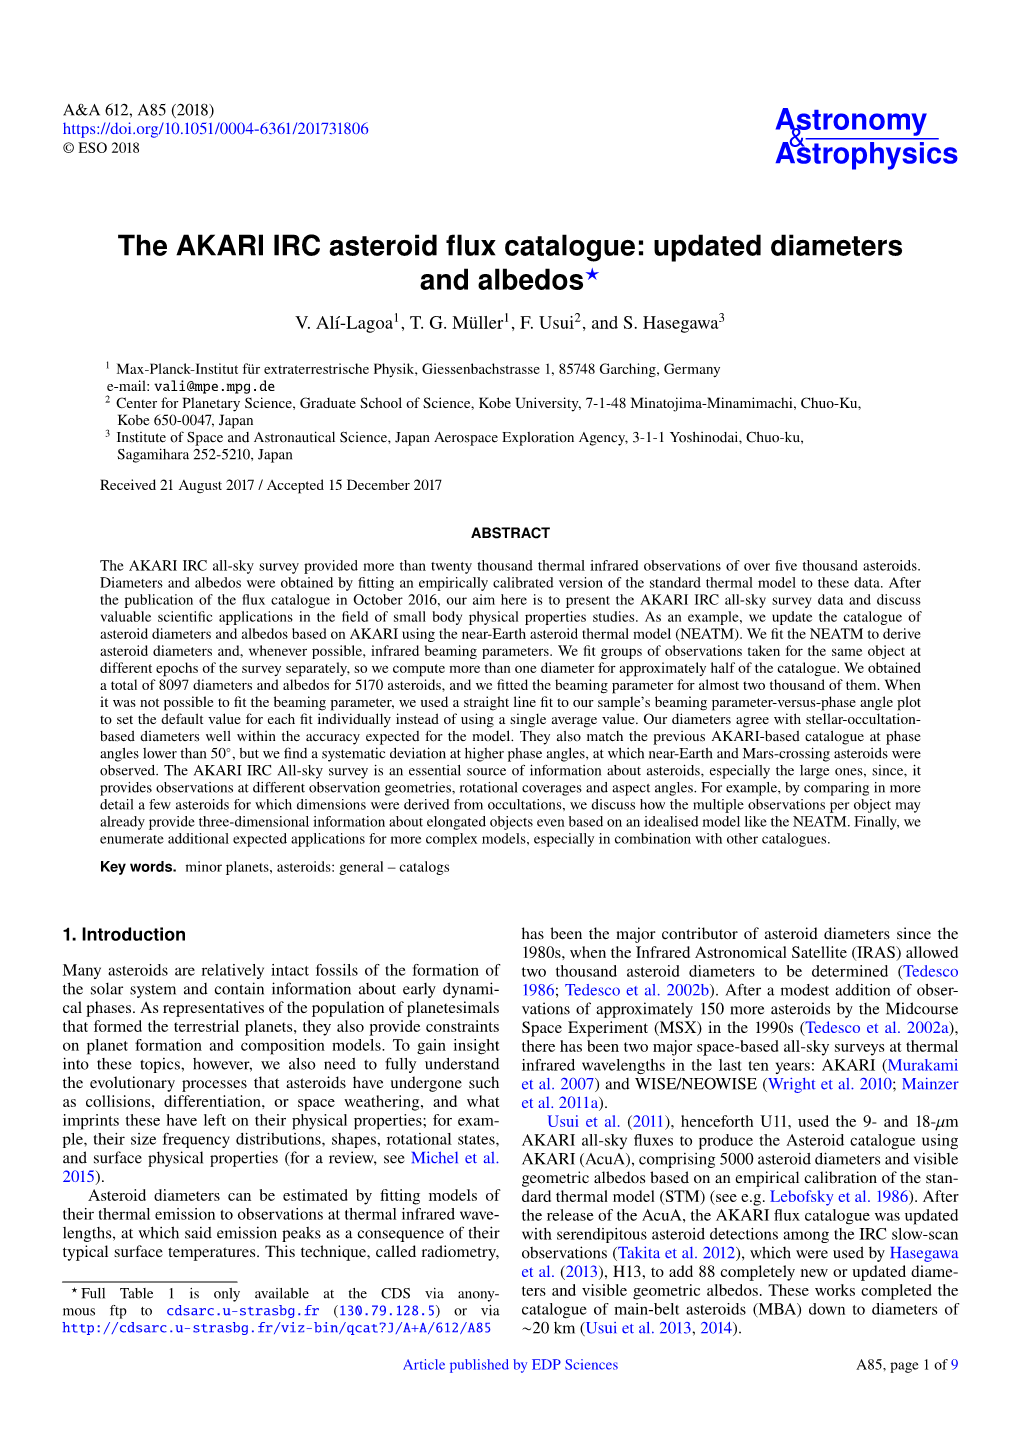 The AKARI IRC Asteroid Flux Catalogue